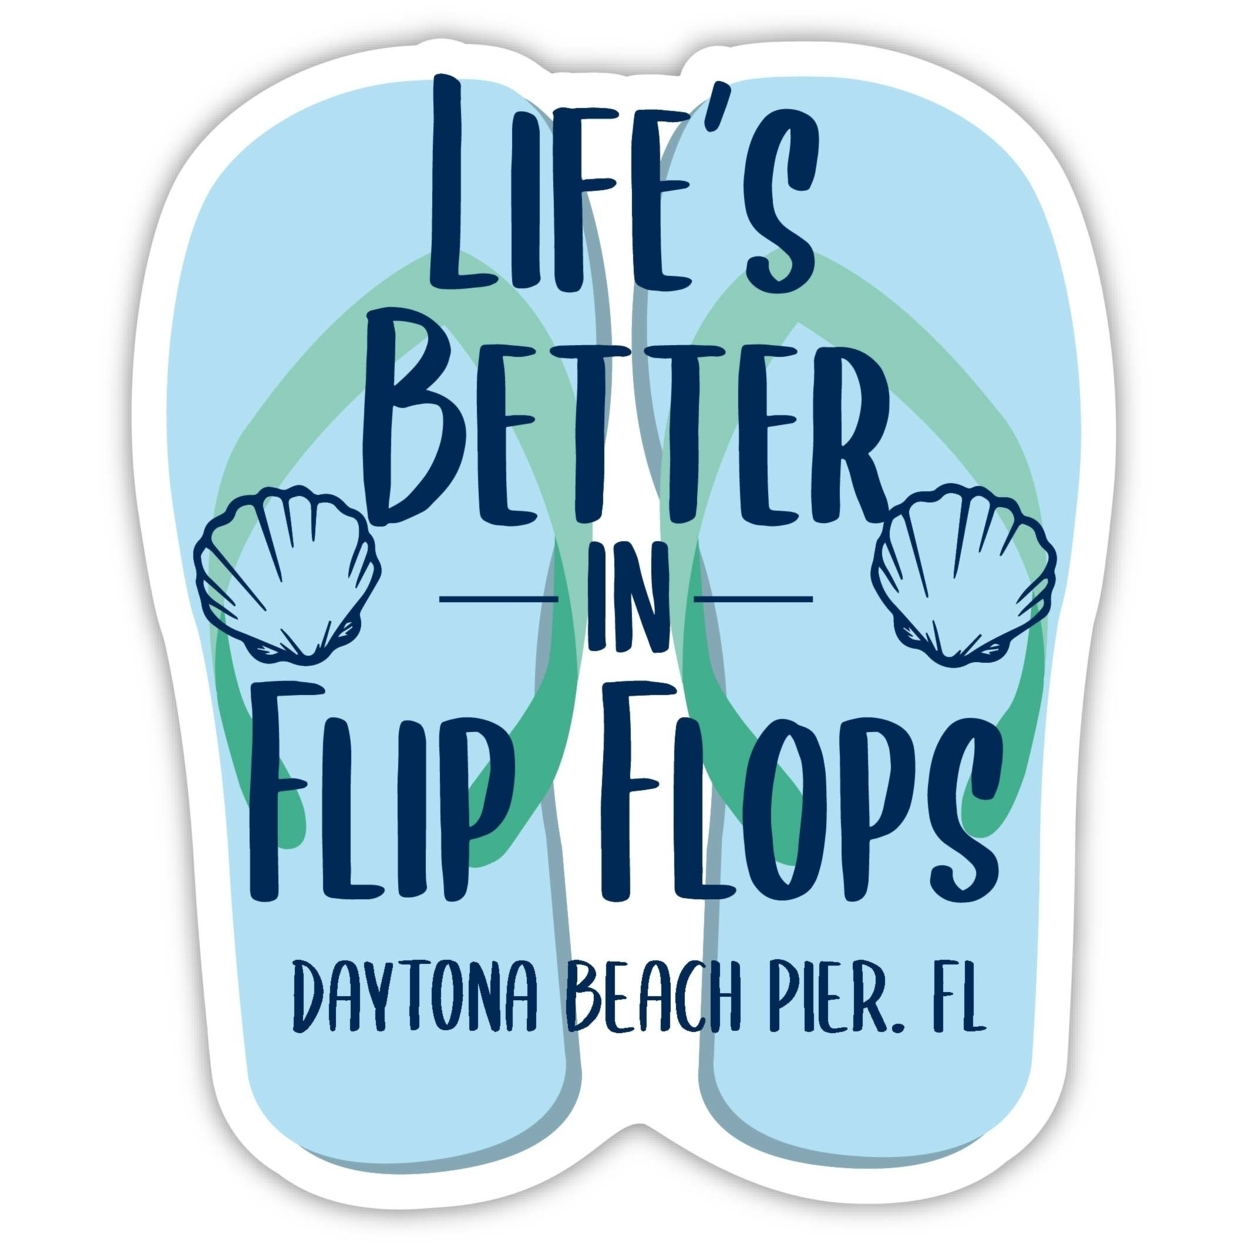 Daytona Beach Pier Florida Souvenir 4 Inch Vinyl Decal Sticker Flip Flop Design